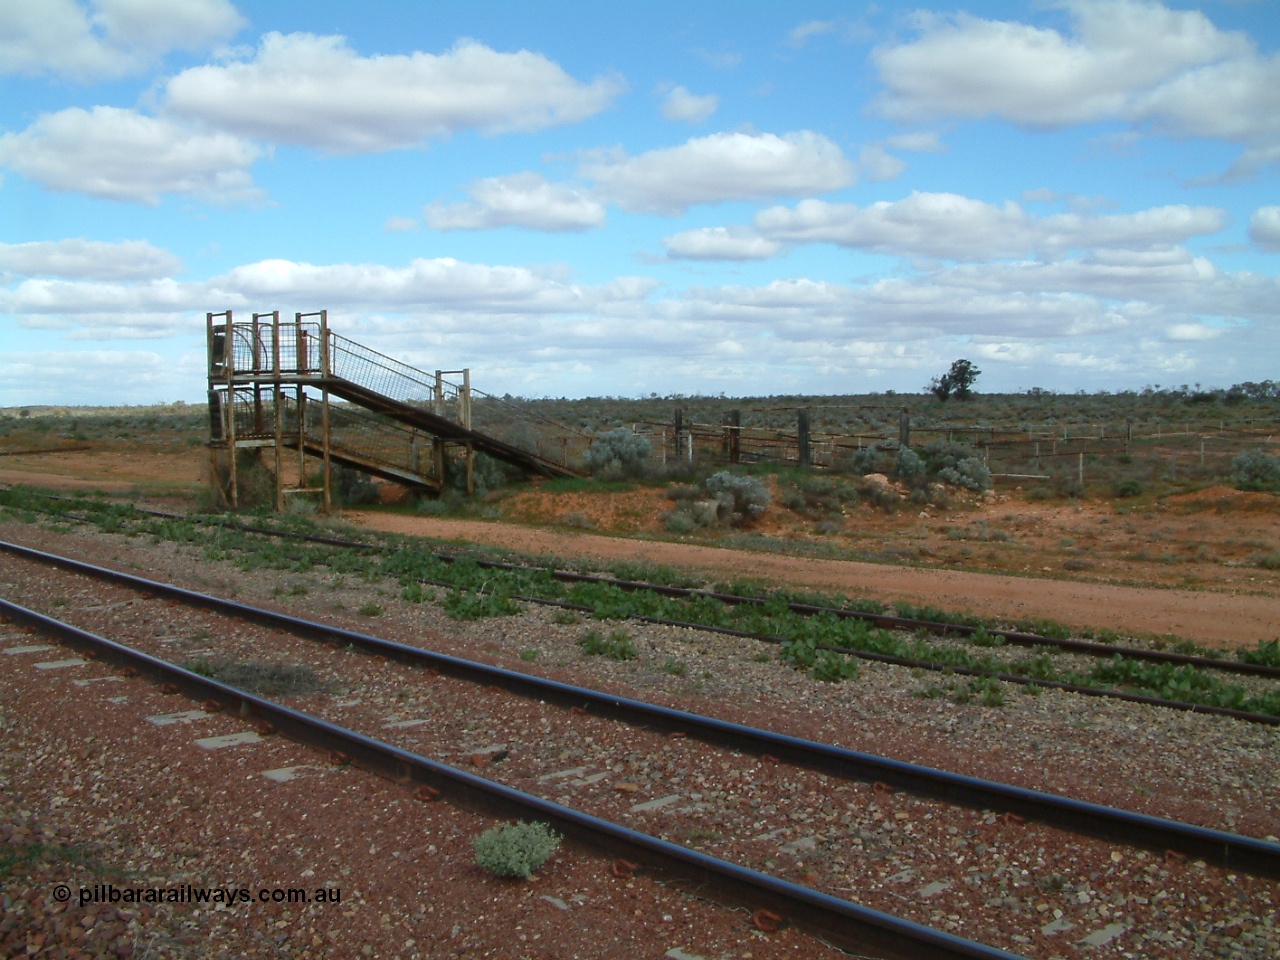 030415 150416
Ferguson, located at the 469 km on the Trans Australian Railway, goods siding with cattle race. [url=https://goo.gl/maps/XNaMGCNxZ4yv7Lrr9]GeoData location[/url].
